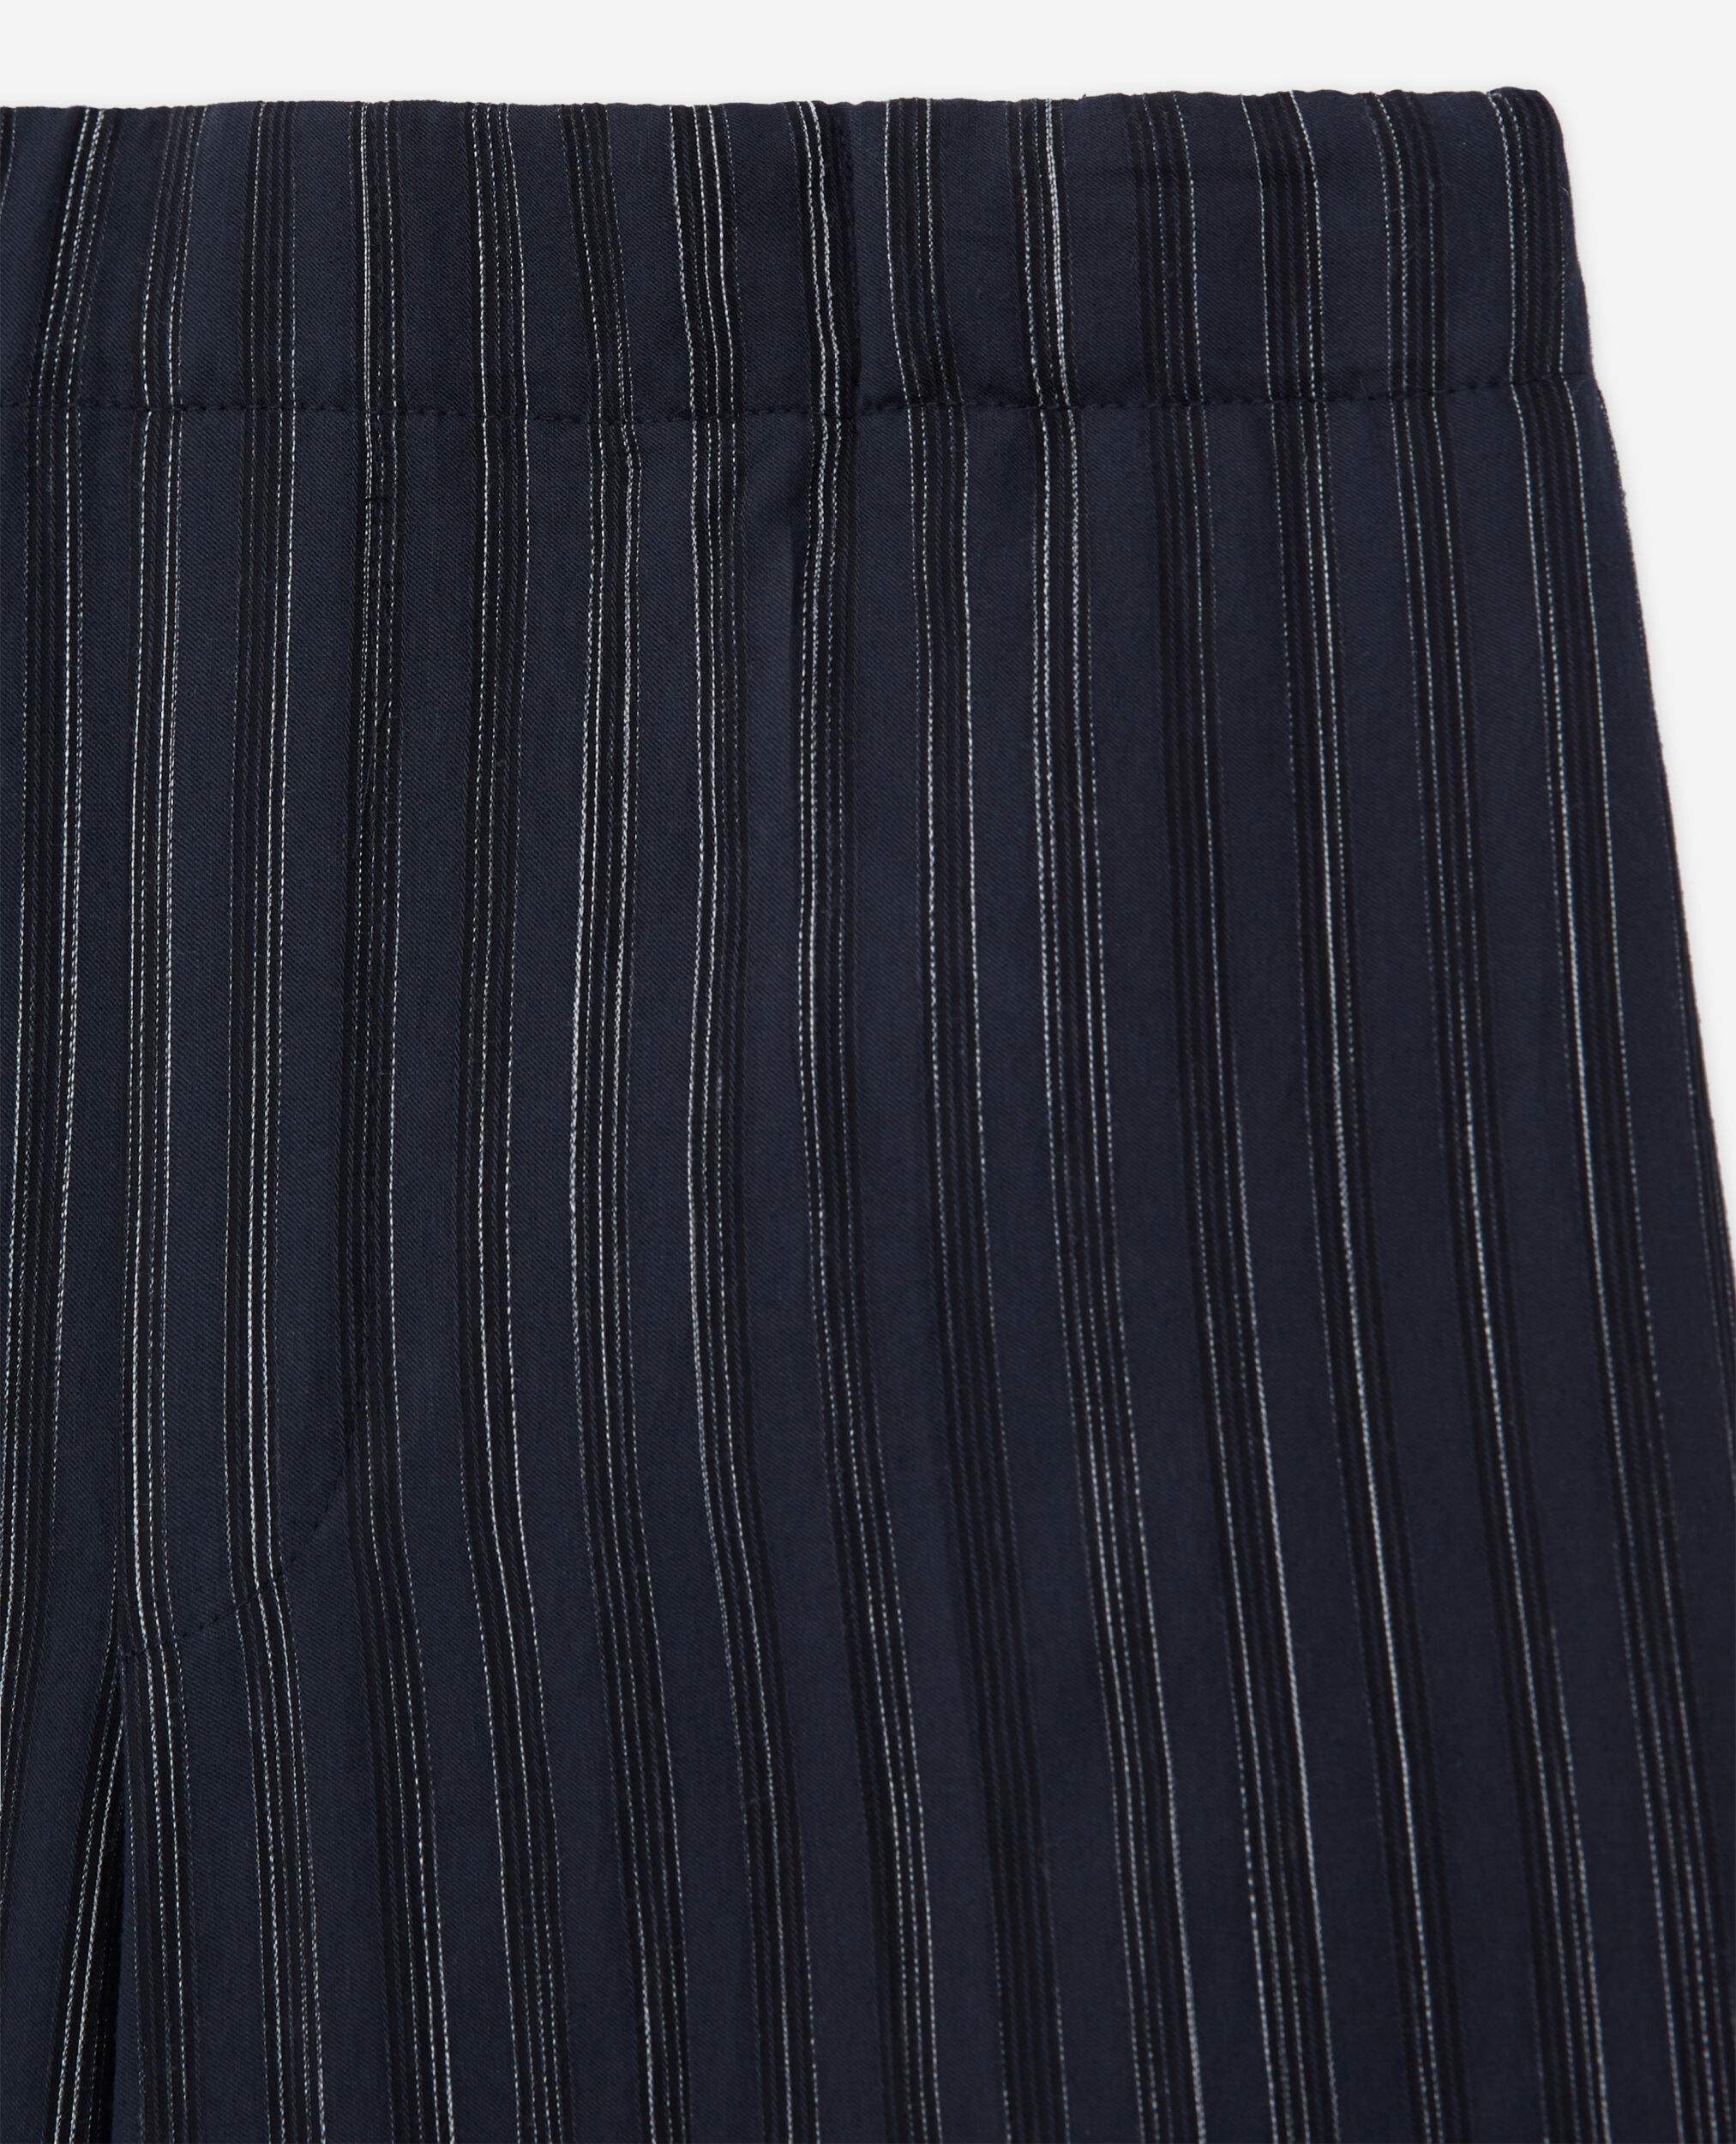 Pantalon à rayures bleu marine, DARK NAVY-ECRU, hi-res image number null